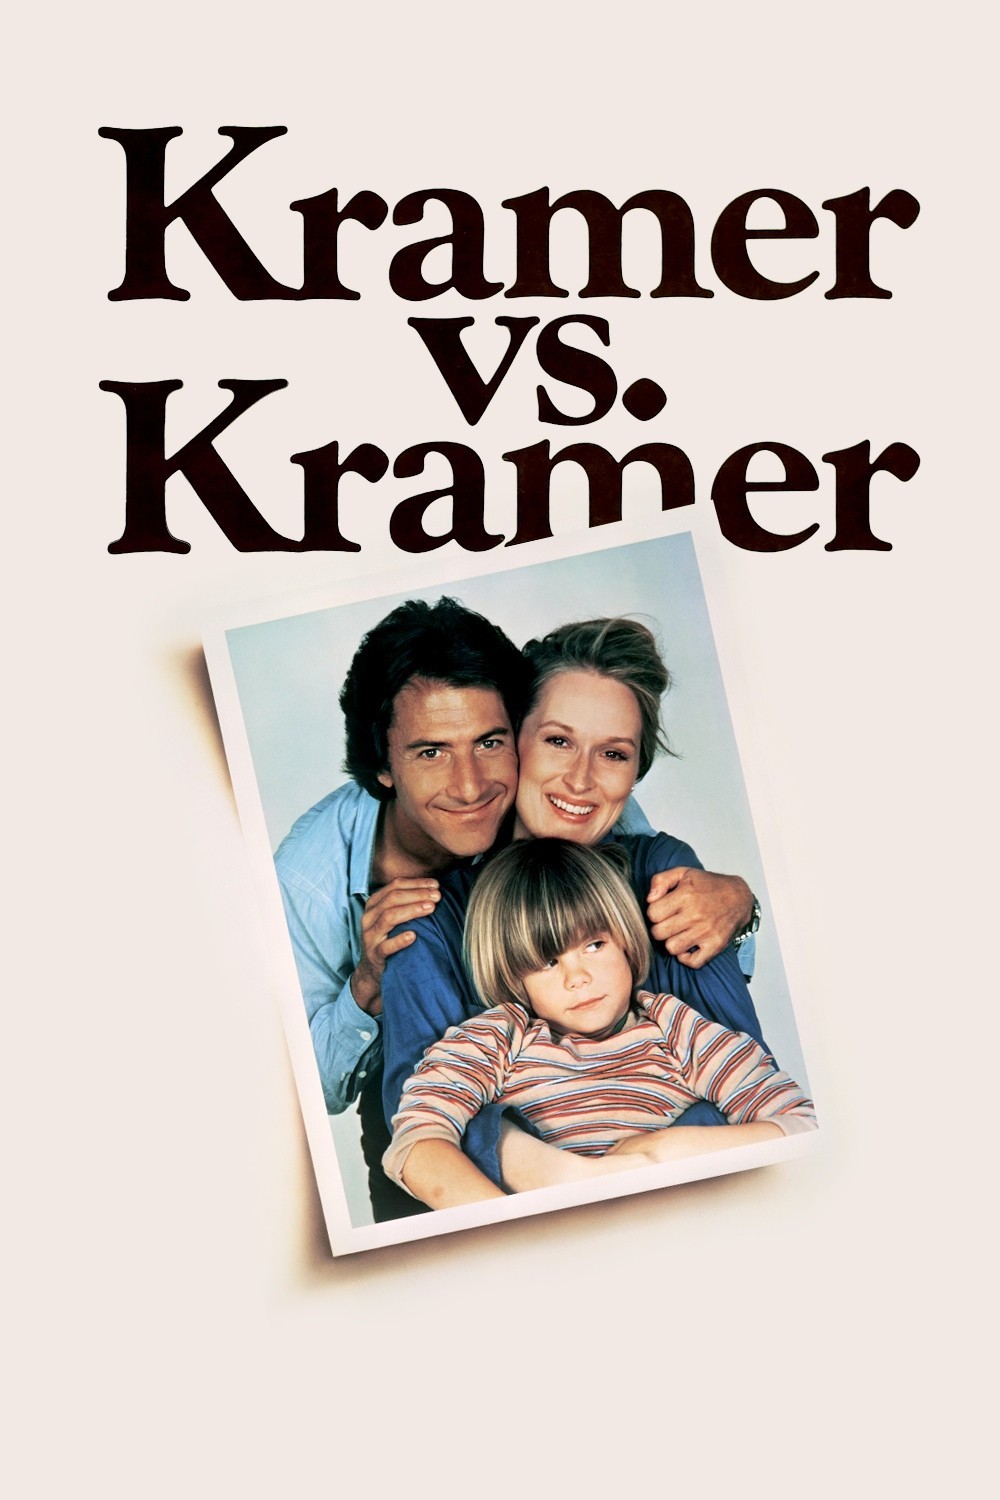 Kramer kontra Kramer